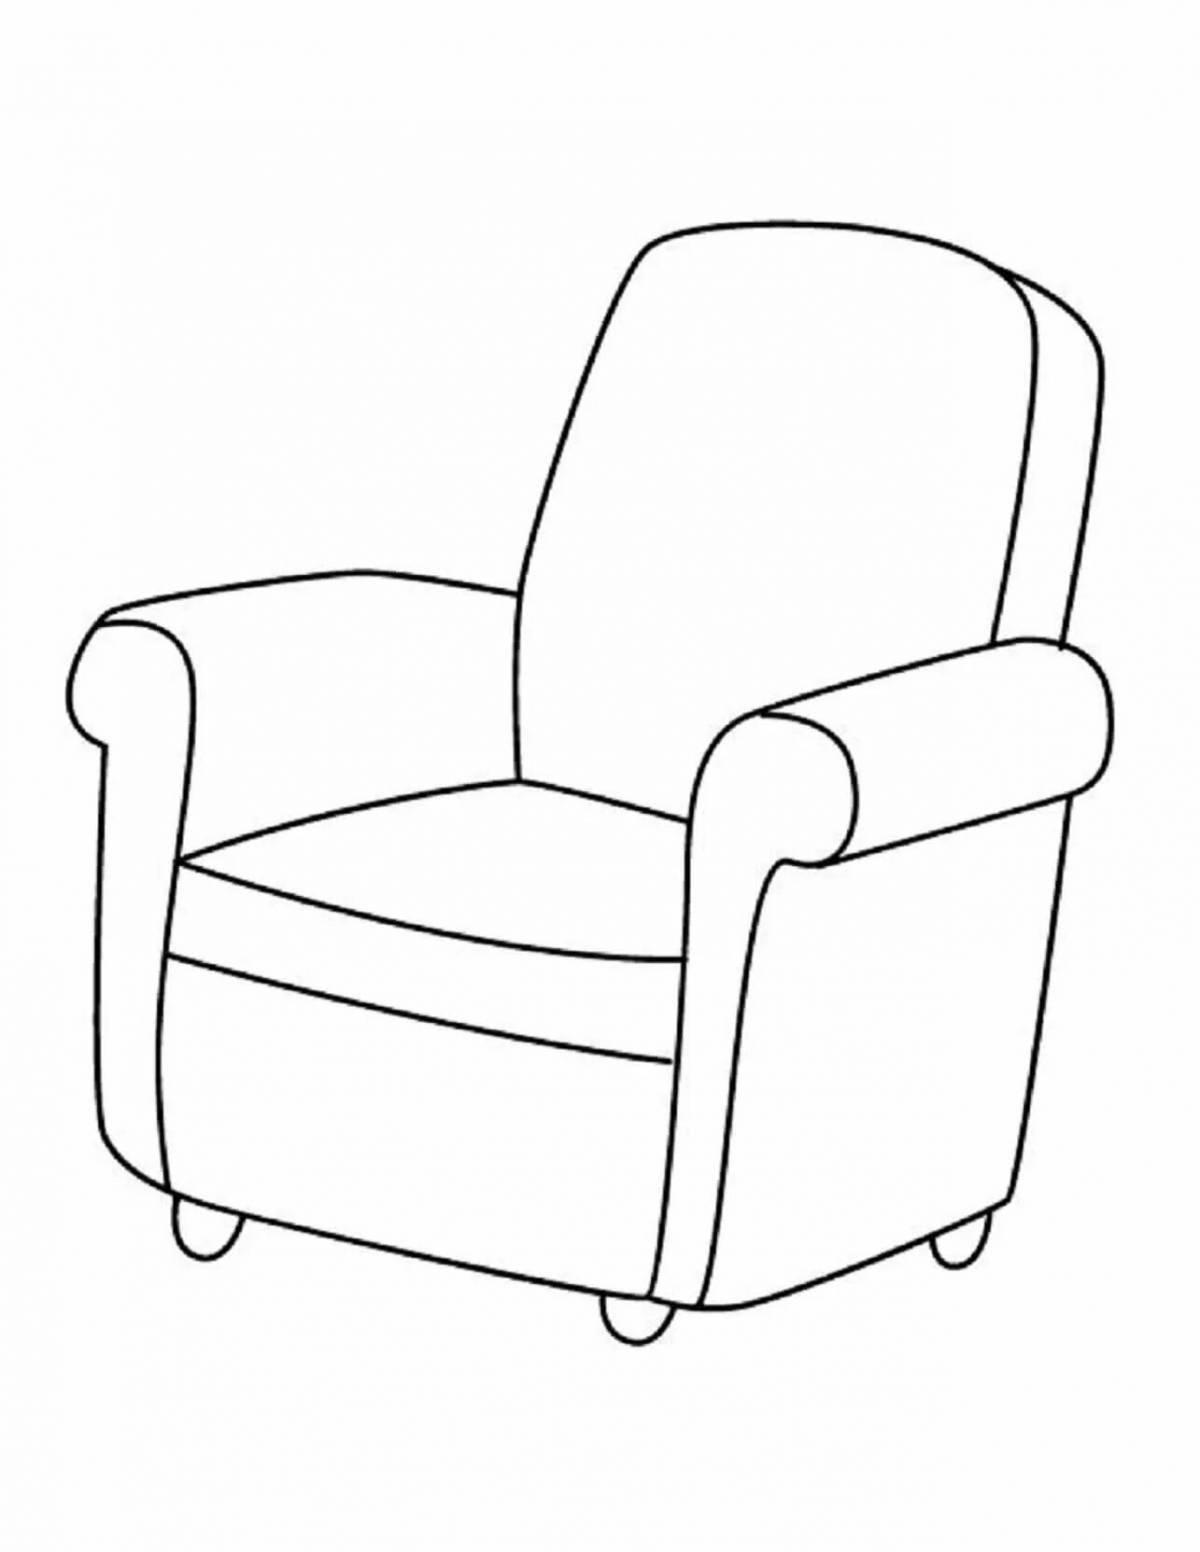 Coloring page joyful sofa chair